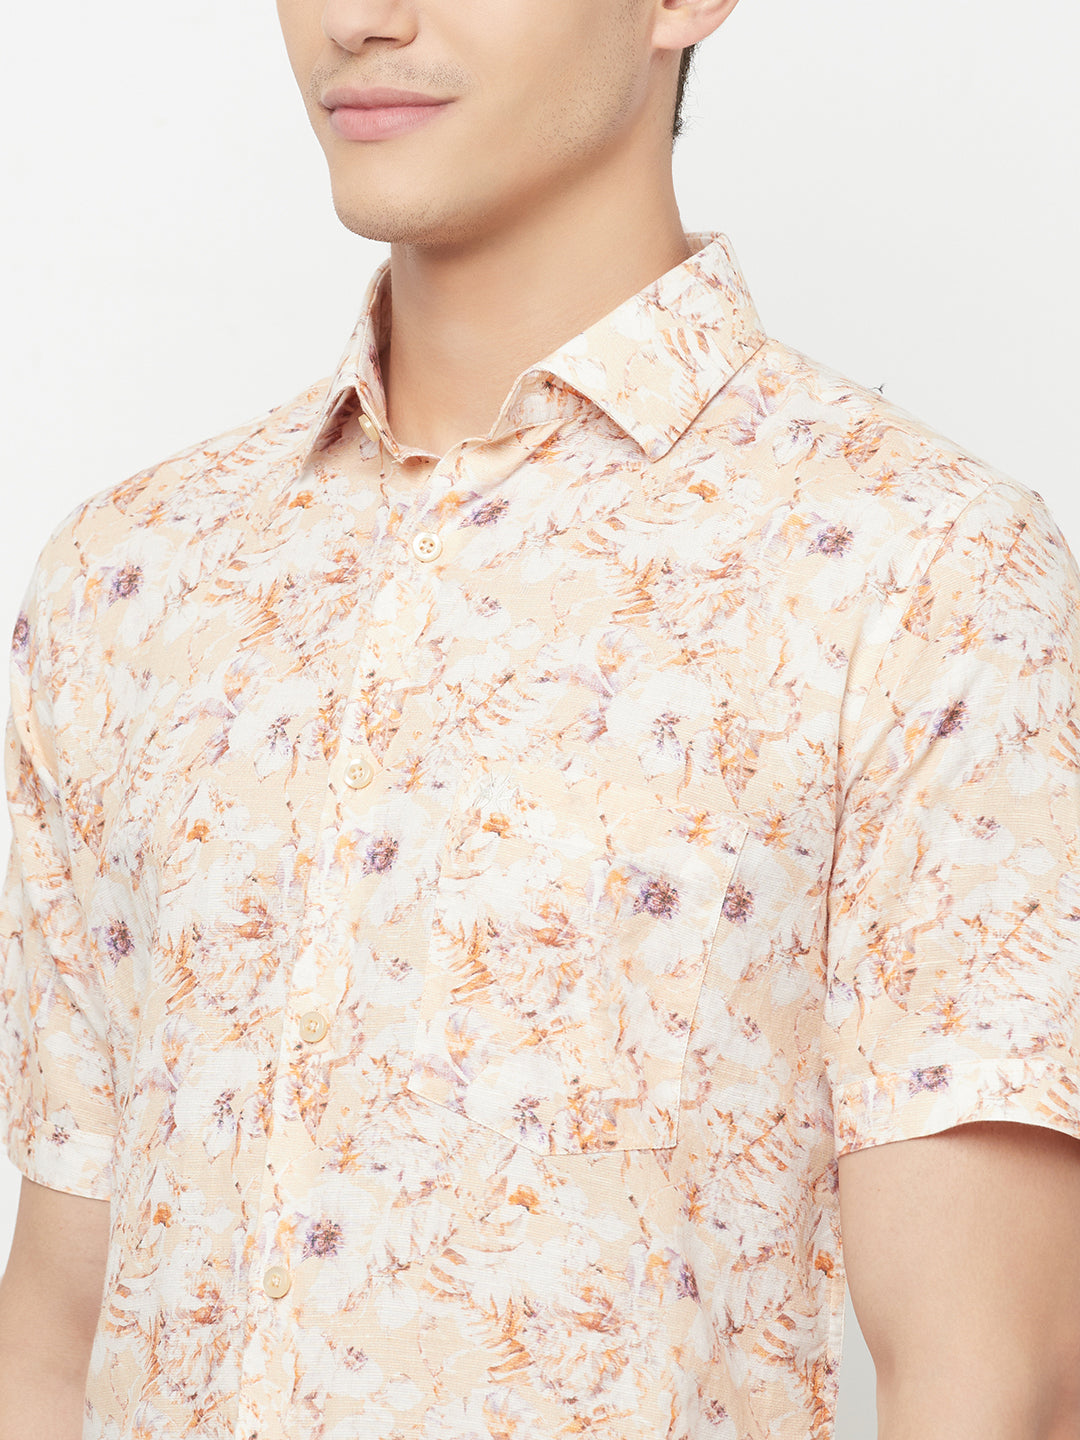 Orange Floral Printed Linen Shirt - Men Shirts